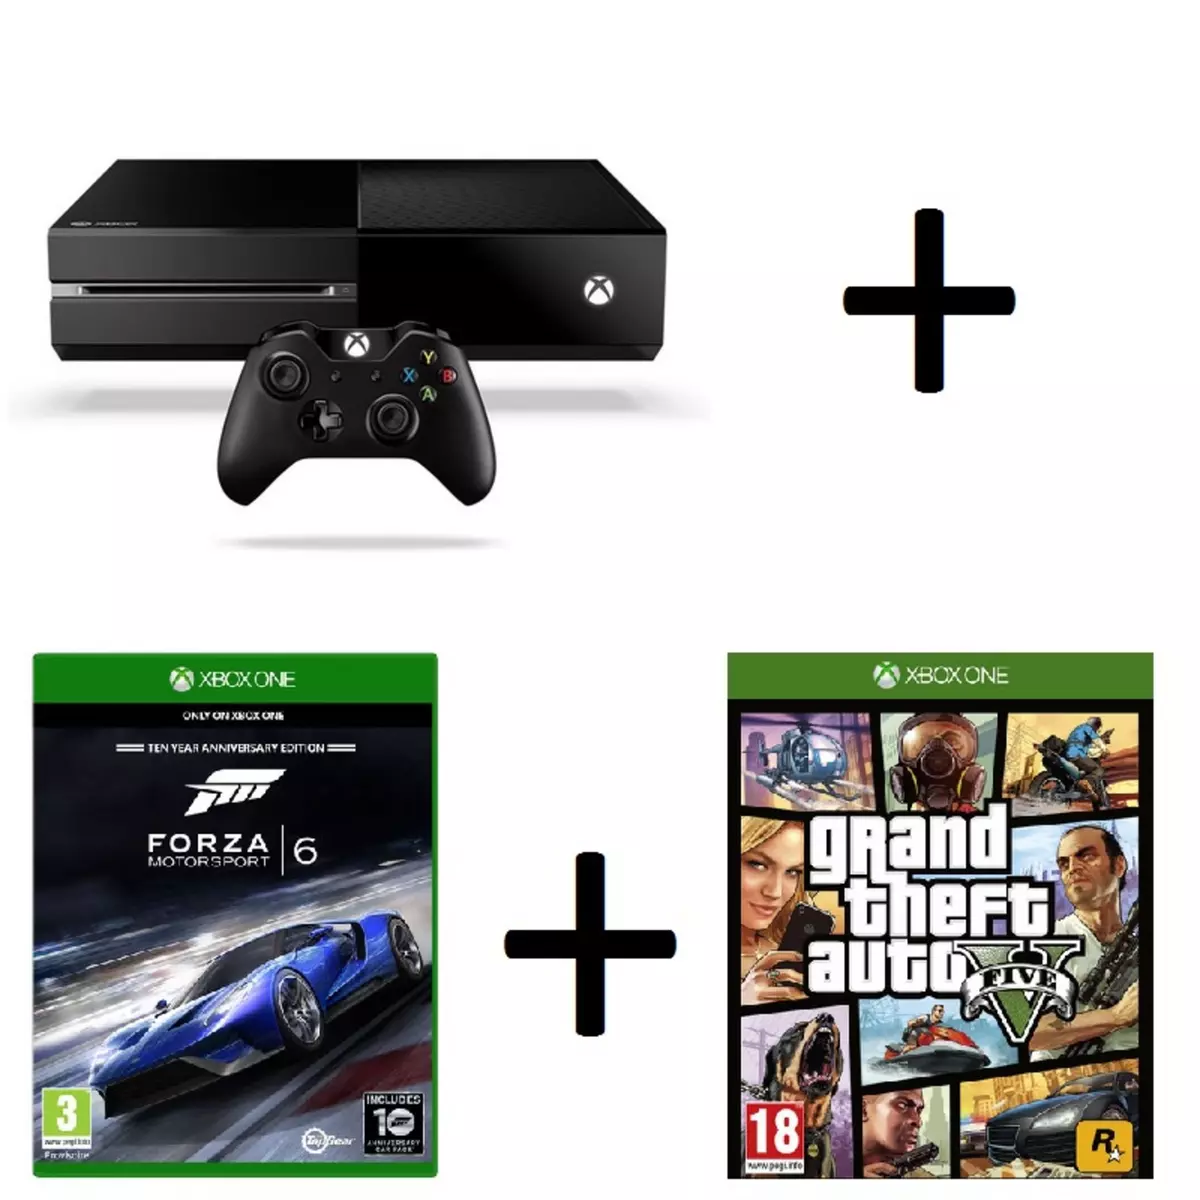 Console Xbox One + Forza Motorsport 6 + Grand Theft Auto V